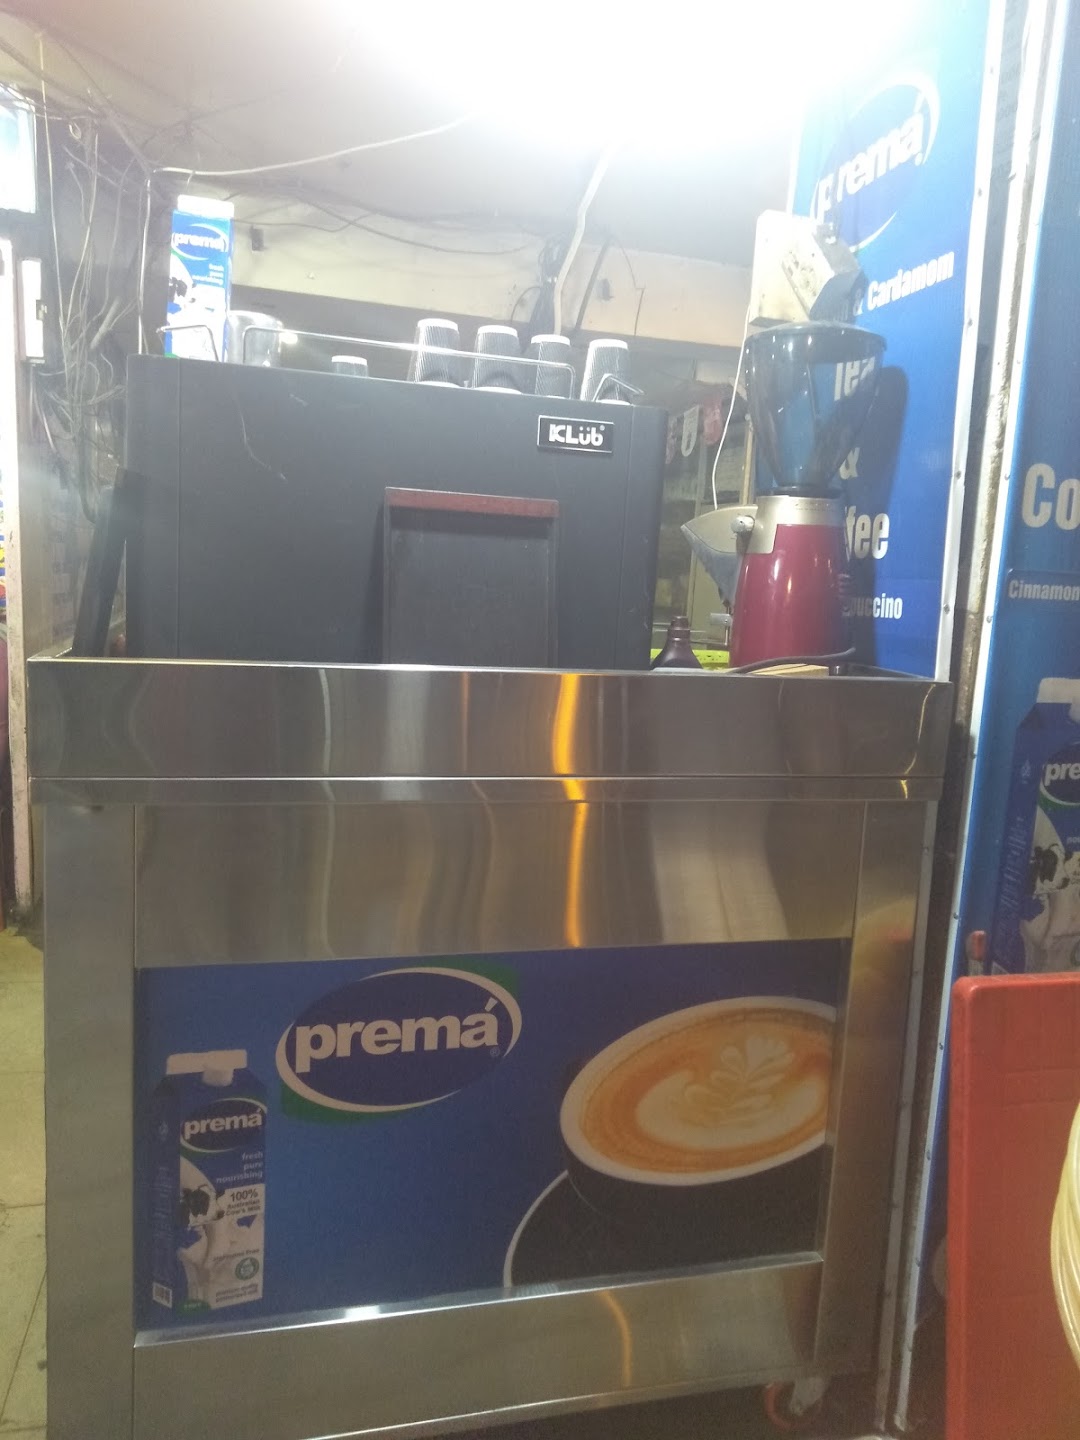 Prema coffee and tea keosk